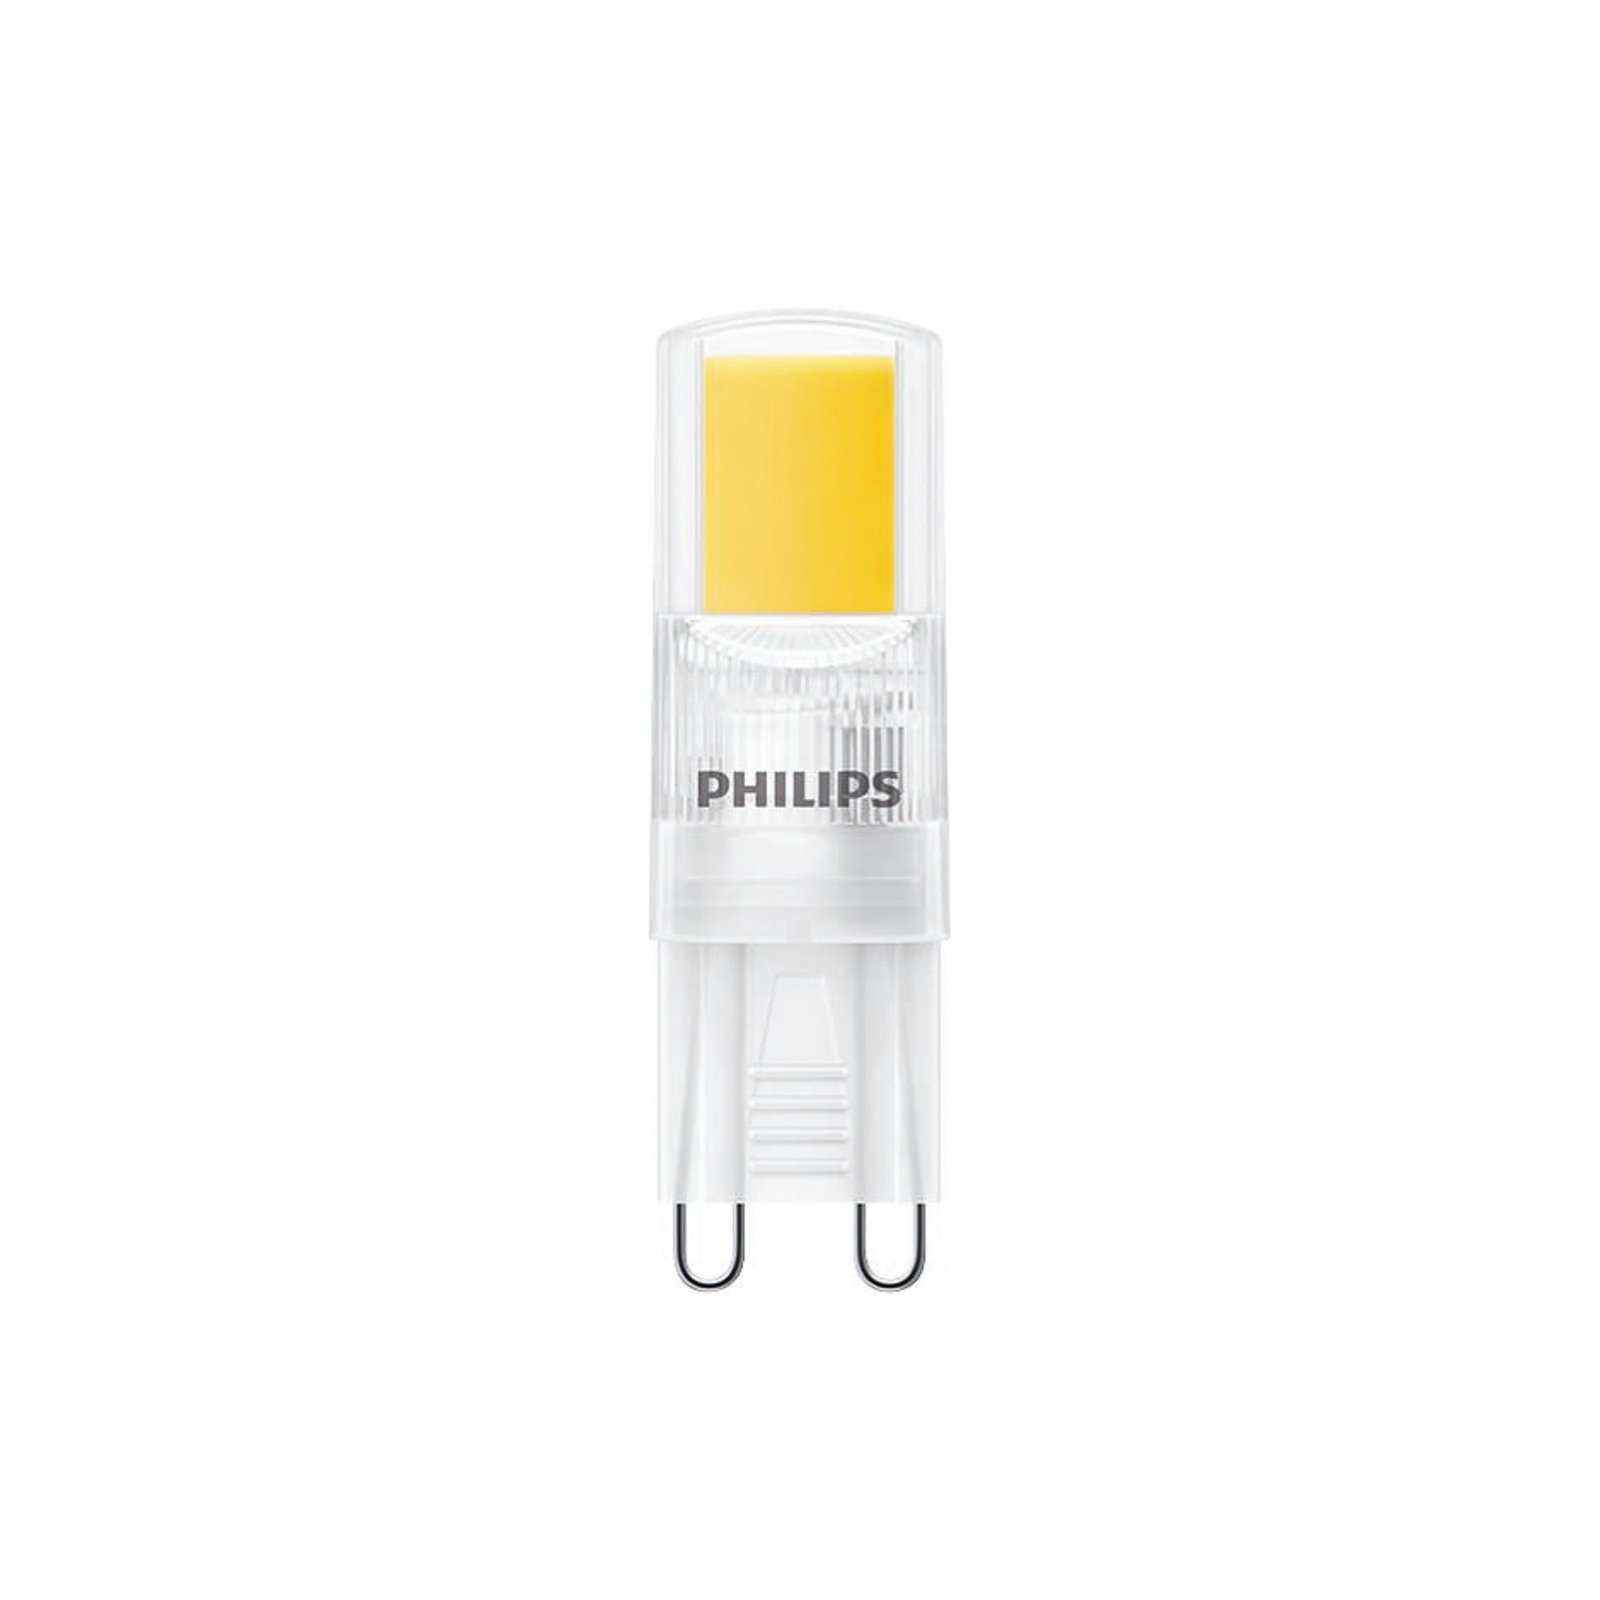 Philips G9 bi-pin LED bulb 2 W 2,700 K